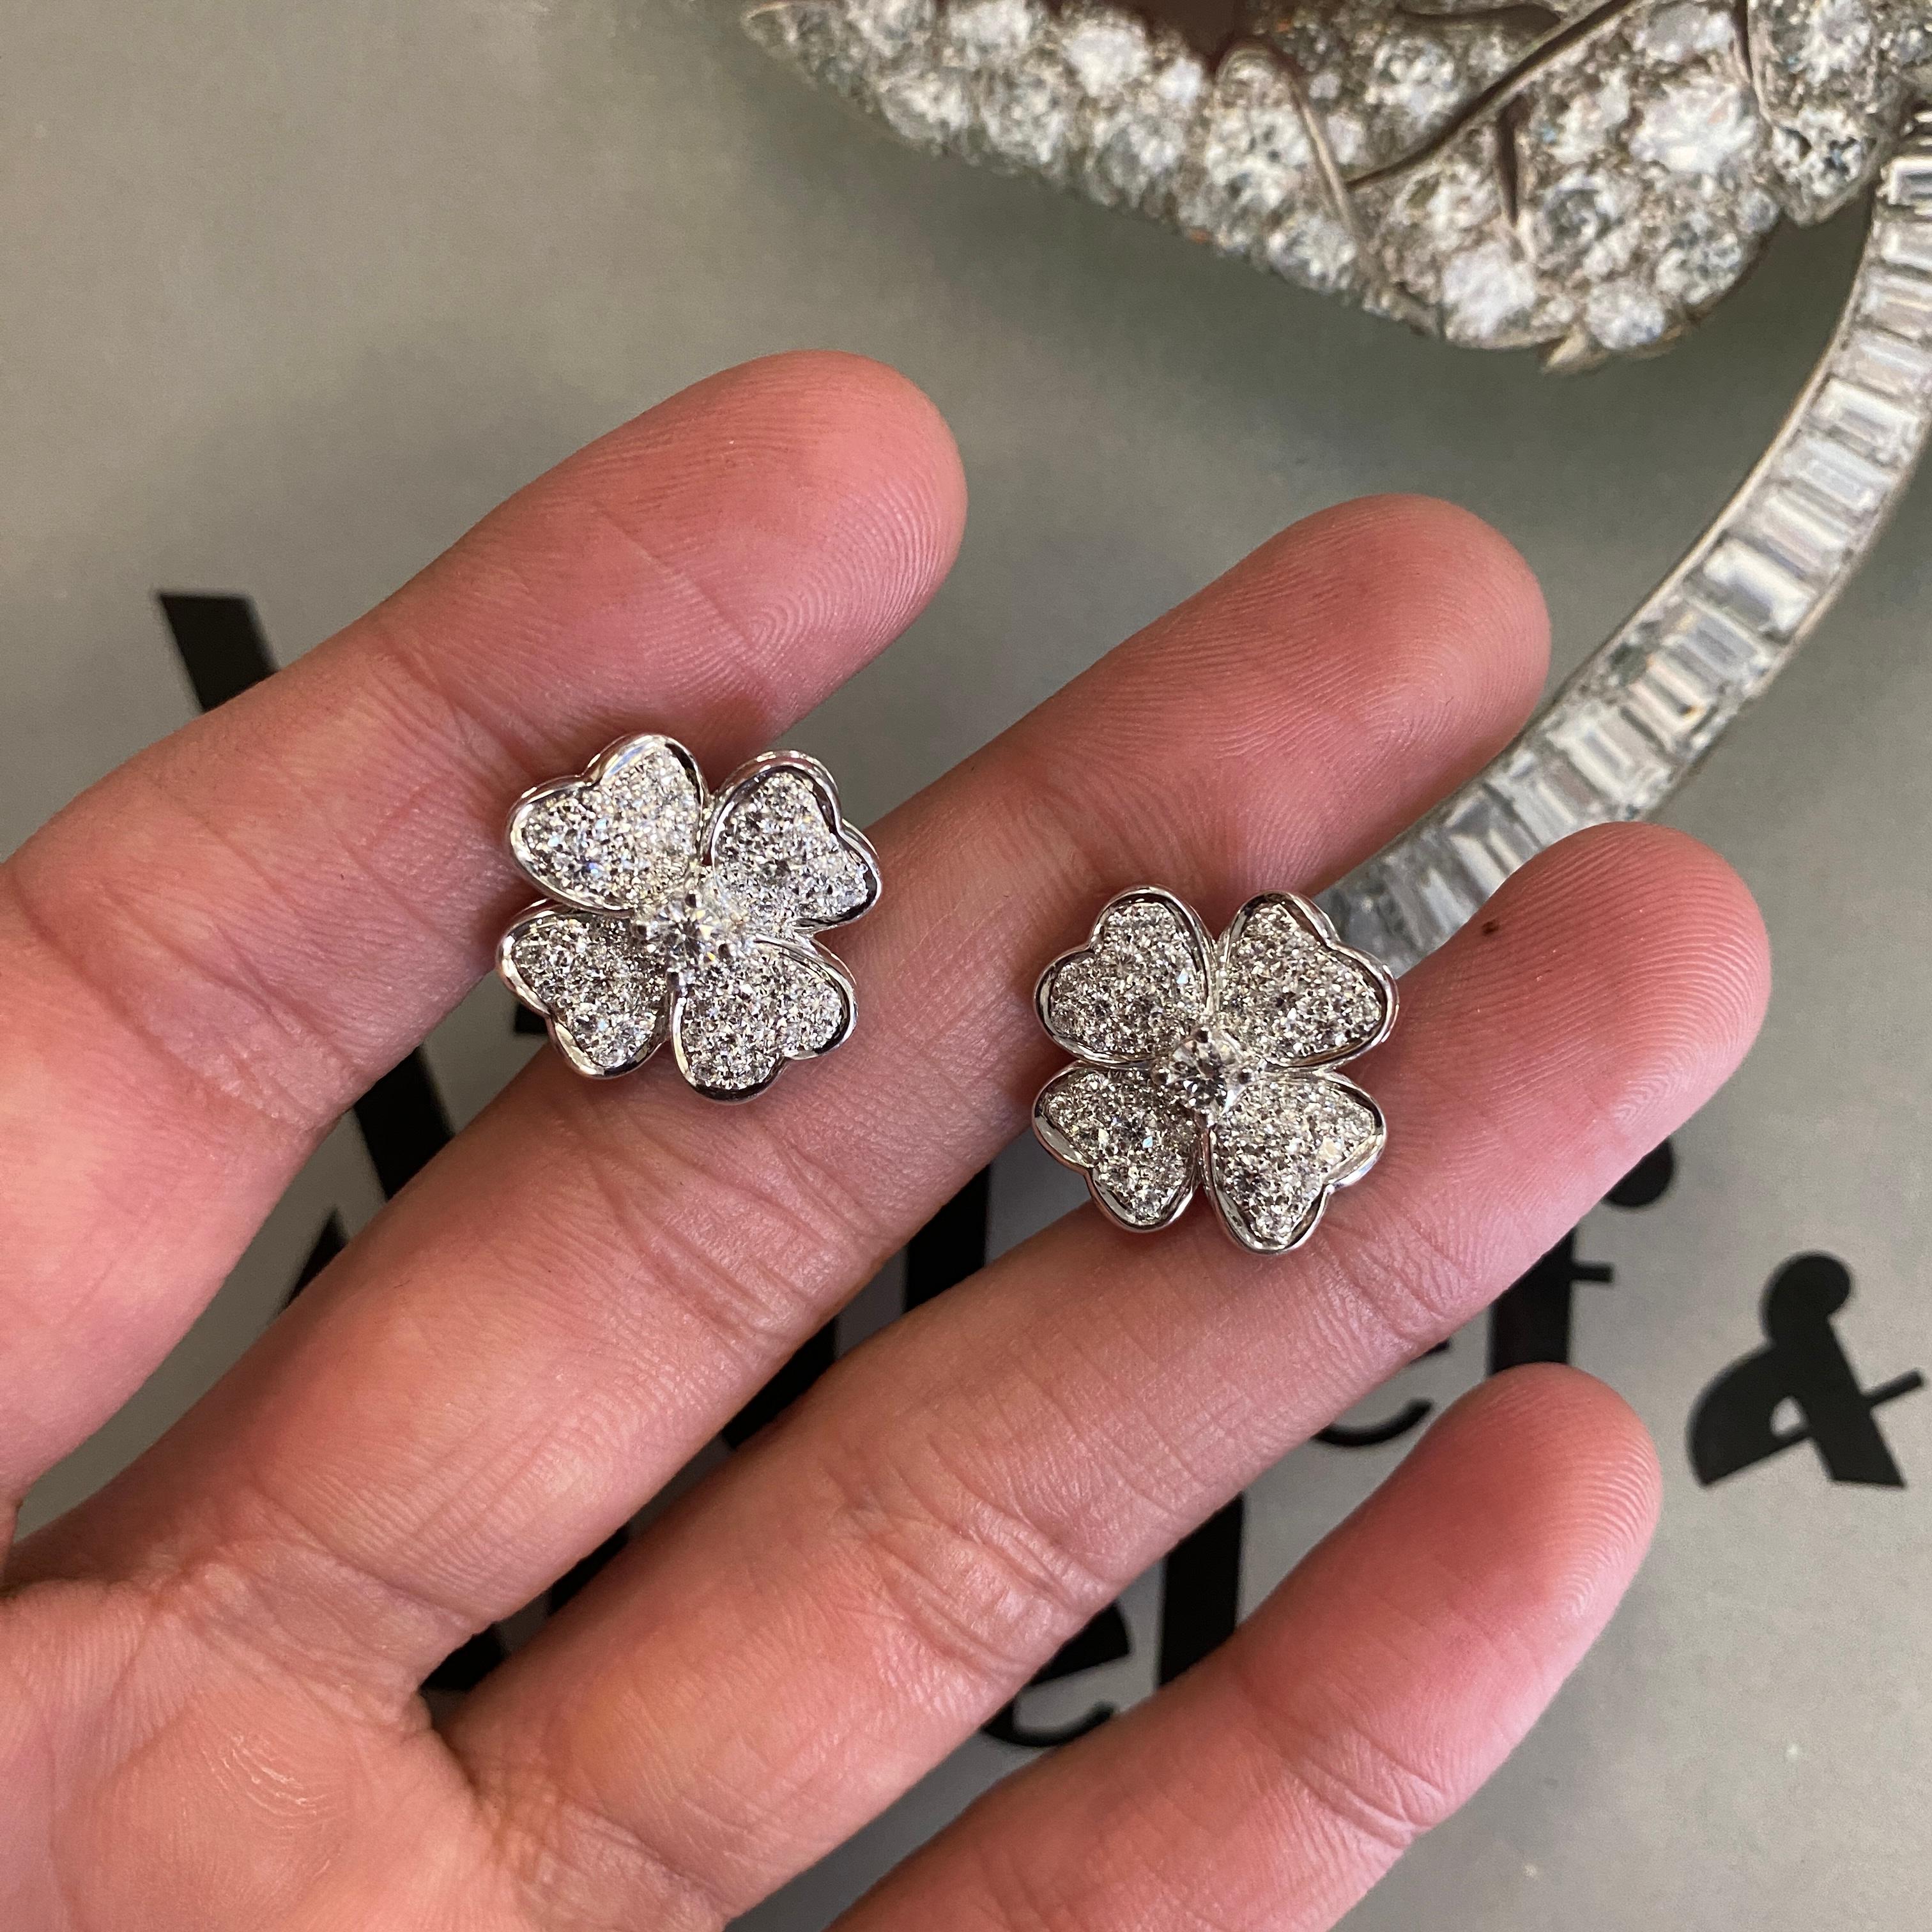 Round Cut Van Cleef & Arpels Cosmos Earrings in 18k White Gold & Diamonds, Small Model